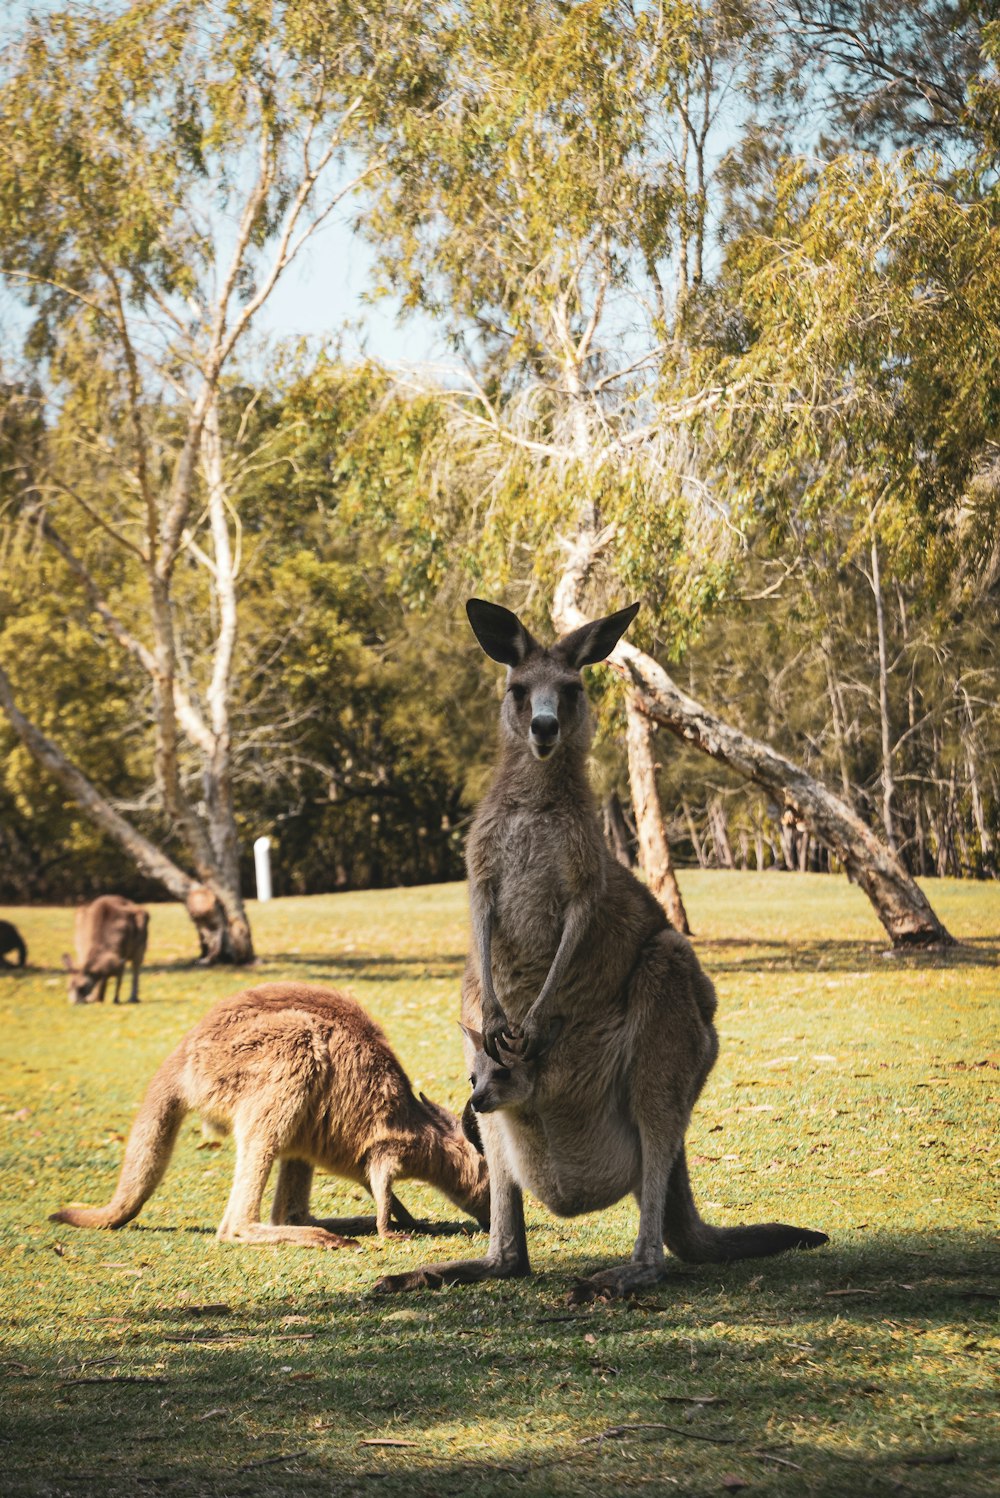 kangaroo standing on green grass field during daytime